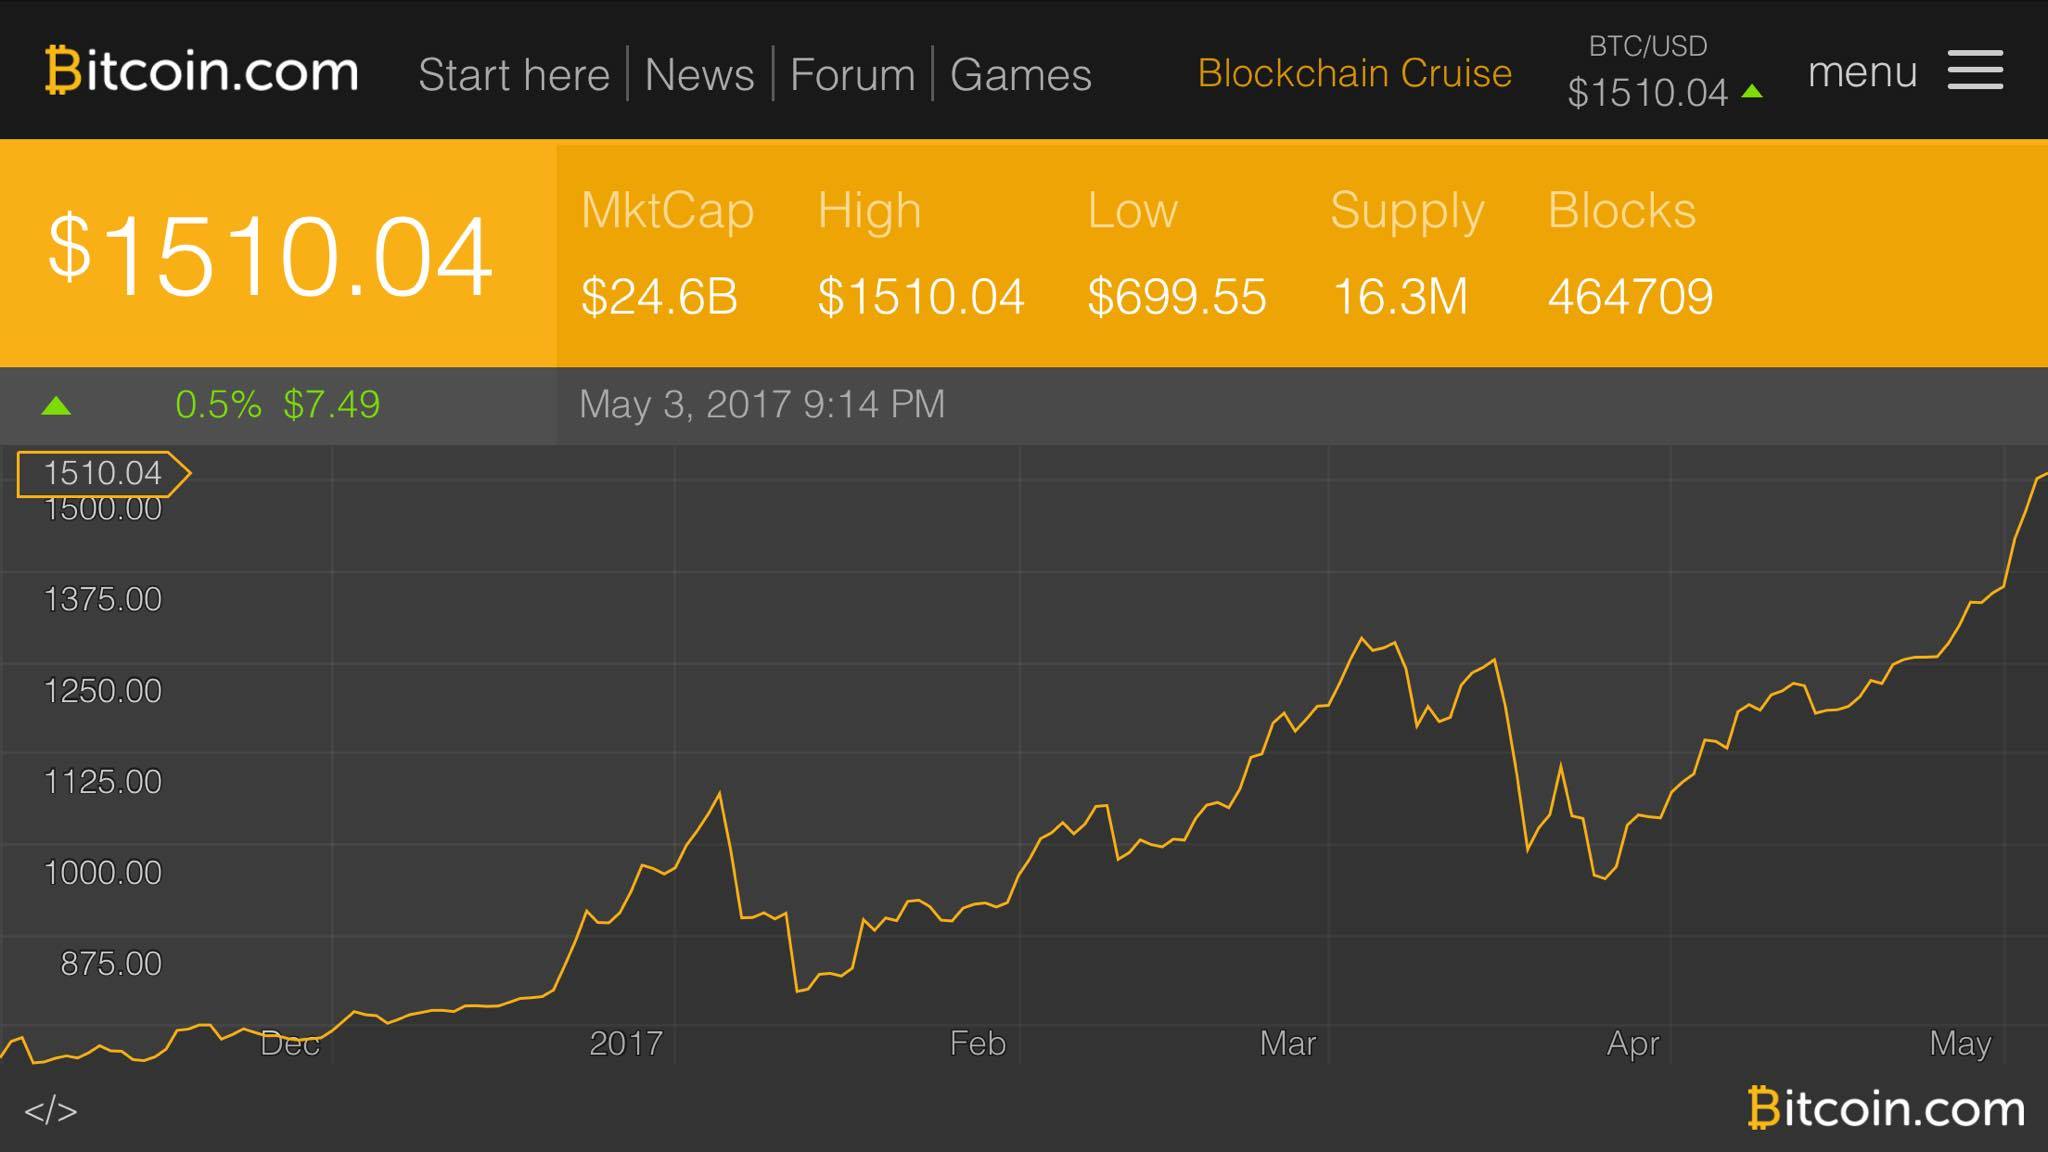 Bitcoin's Price Goes Full Throttle Blasting Past $1500